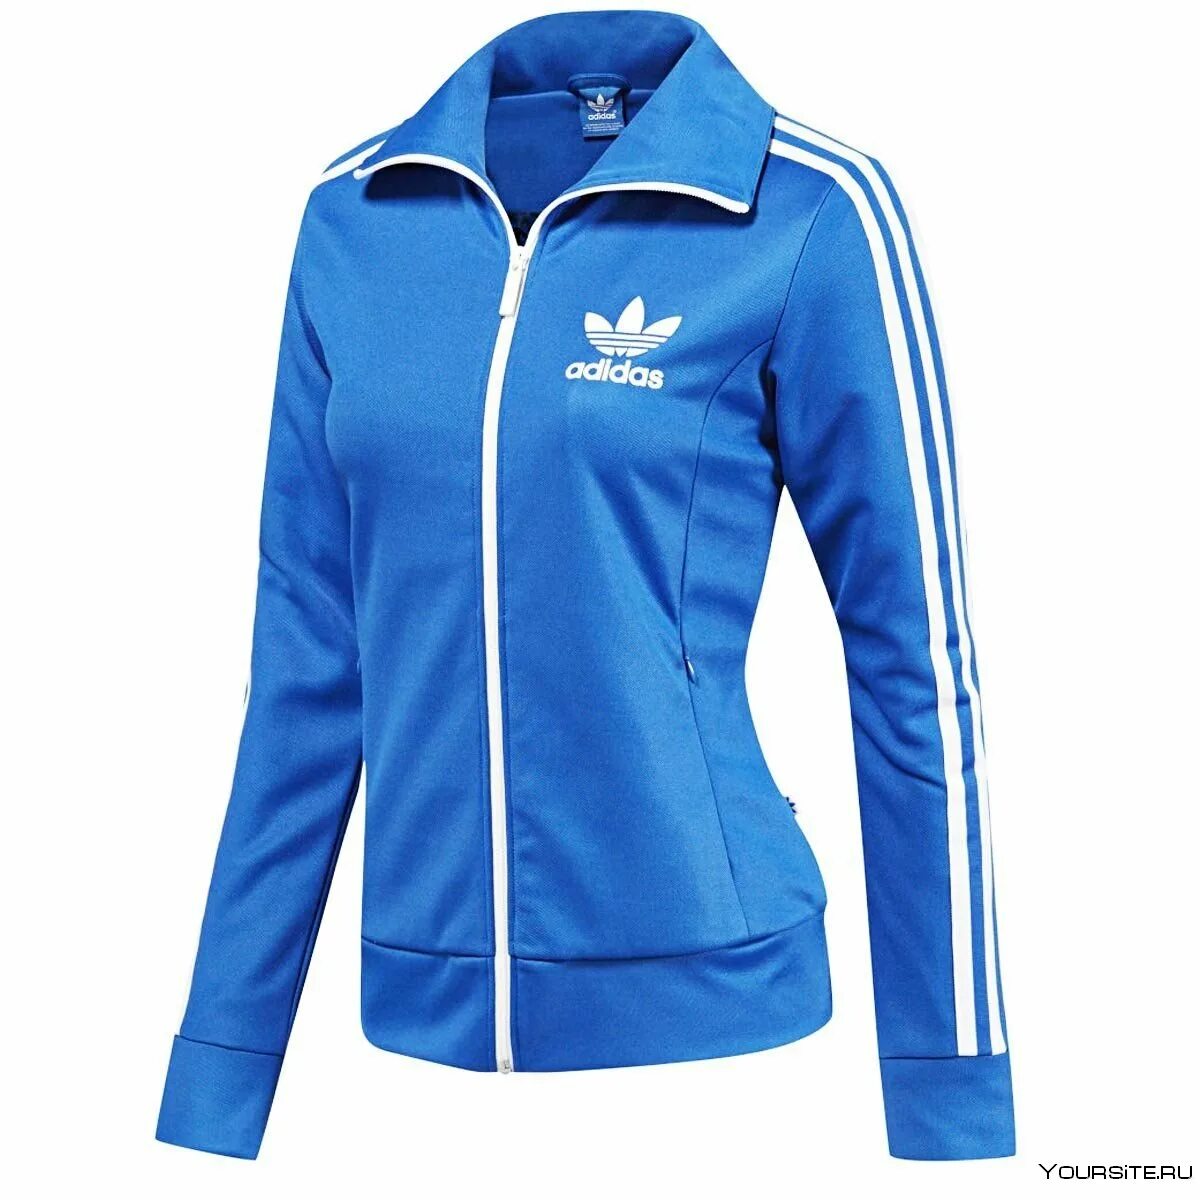 Tracksuit adidas женский. Adidas track Top женская. Adidas clime365 женский костюм. Олимпийка адидас женская синяя.